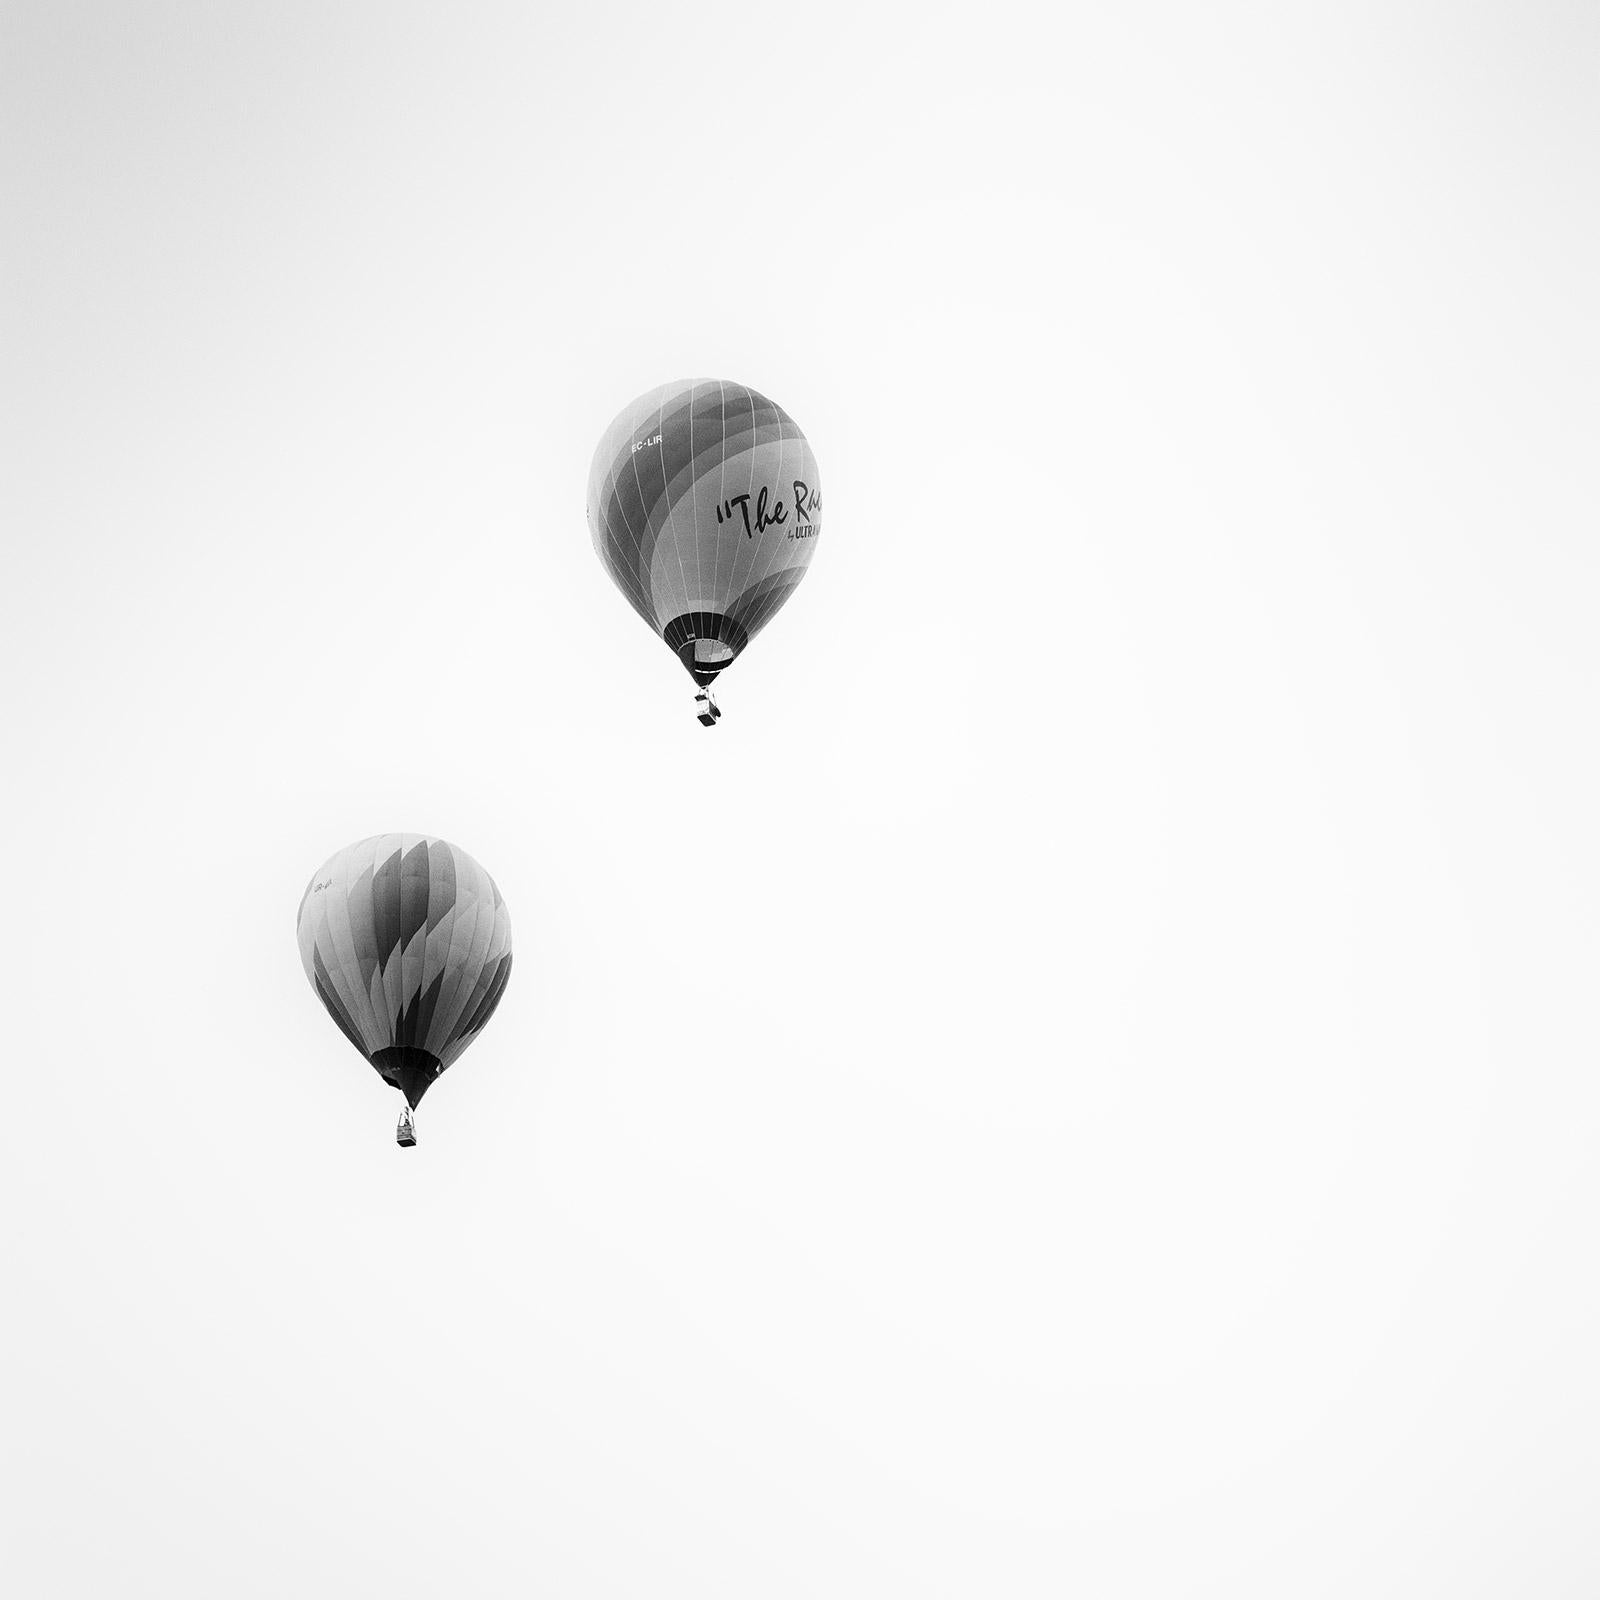 Gerald Berghammer Landscape Photograph - Hot Air Balloon Championship, Austria, black and white landscape art photography